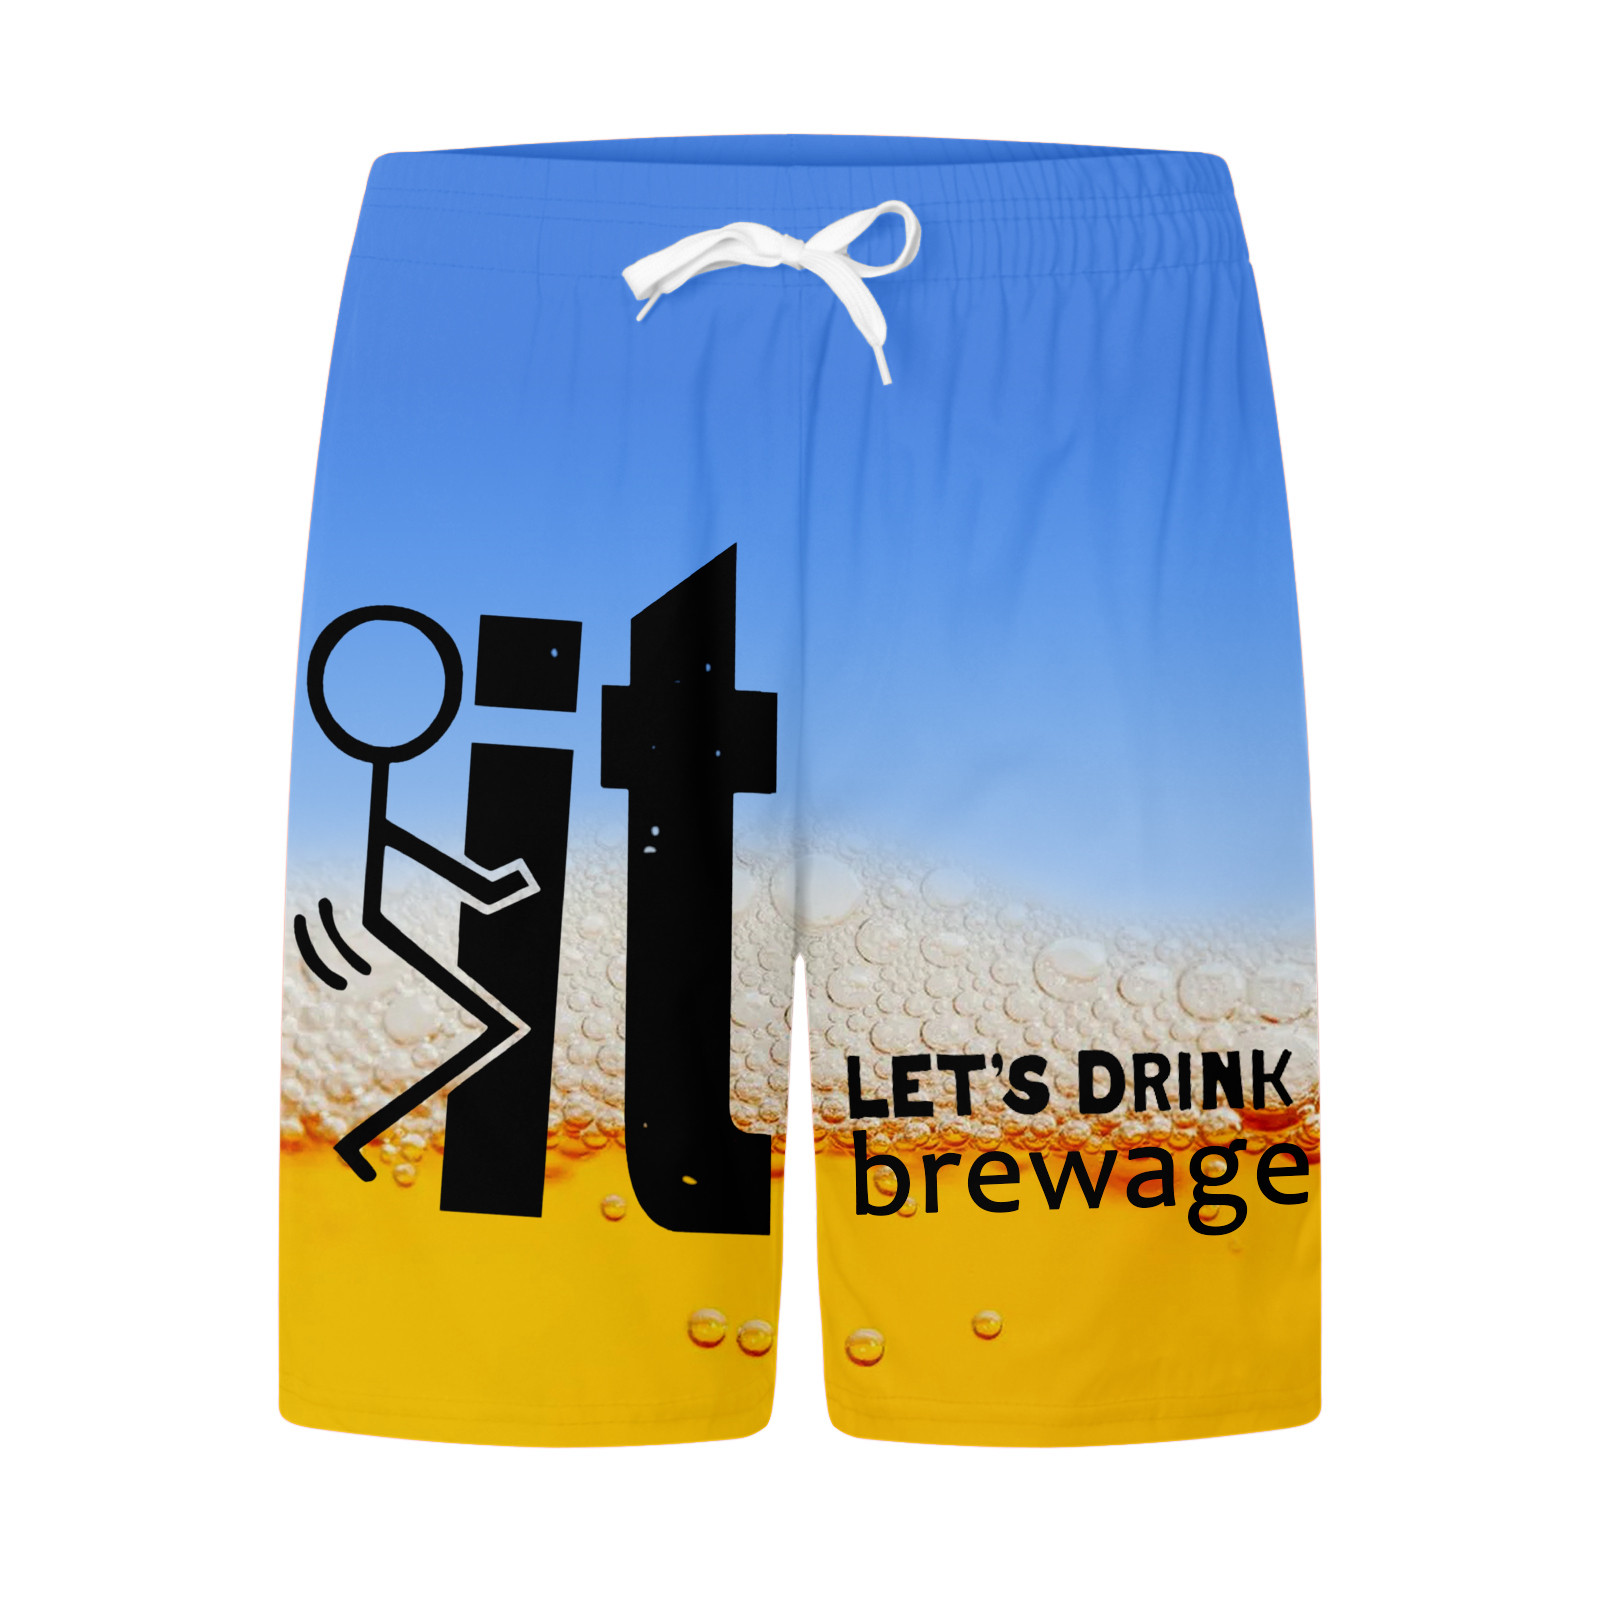 PEONAVET Mens Swim Trunks Quick Dry Beach Shorts Independence Day ...